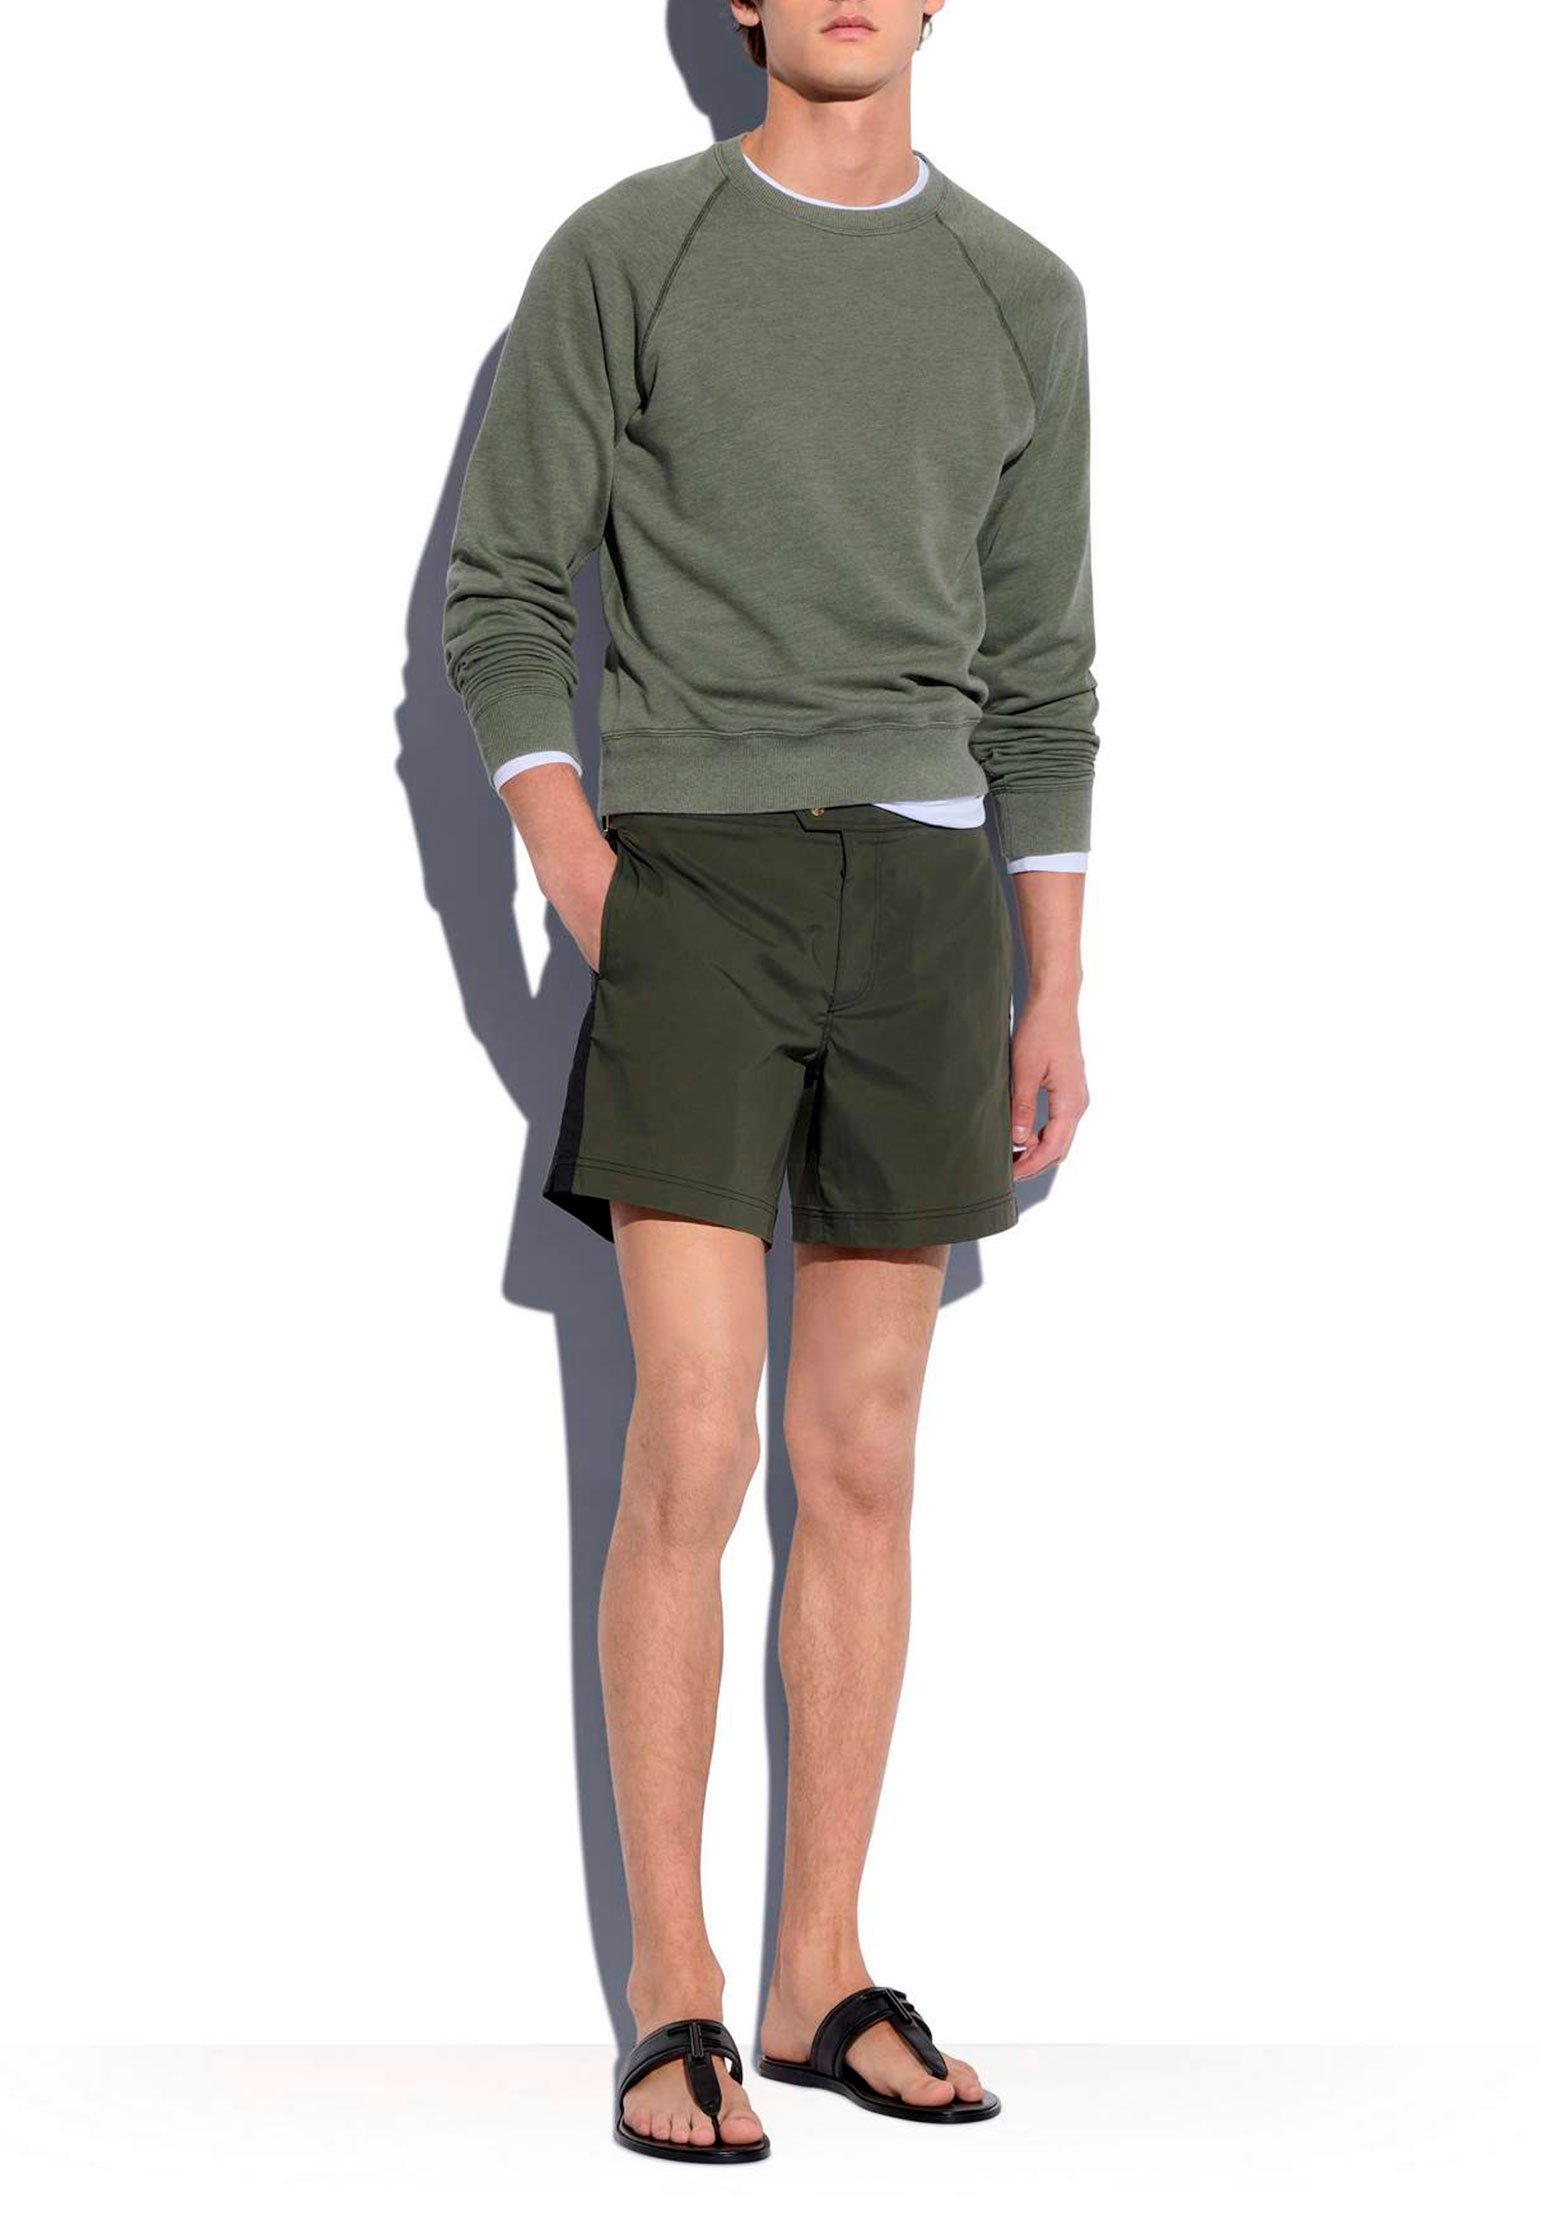 Beachwear TOM FORD Color: khaki (Code: 1161) in online store Allure